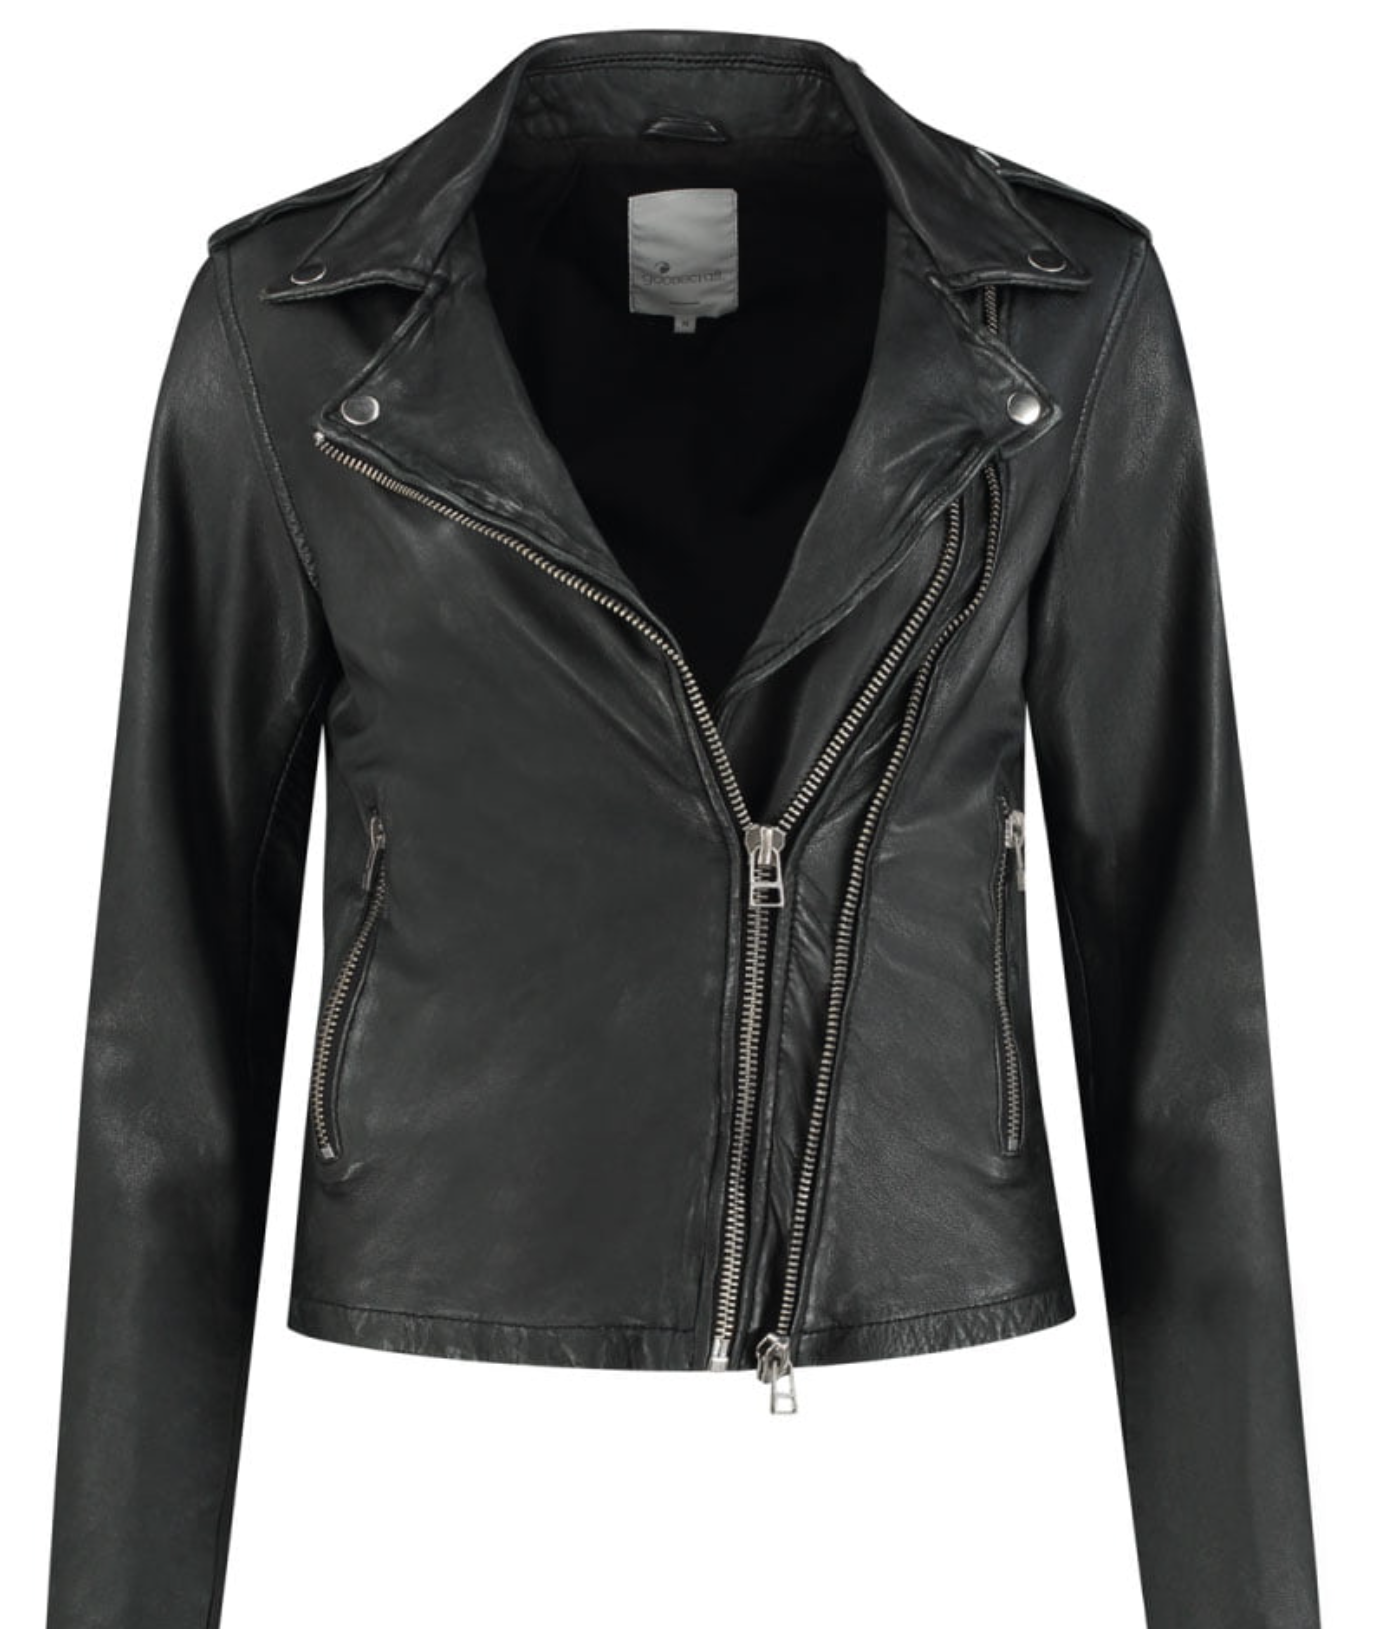 Goosecraft leather biker jacket 513 - Roomer